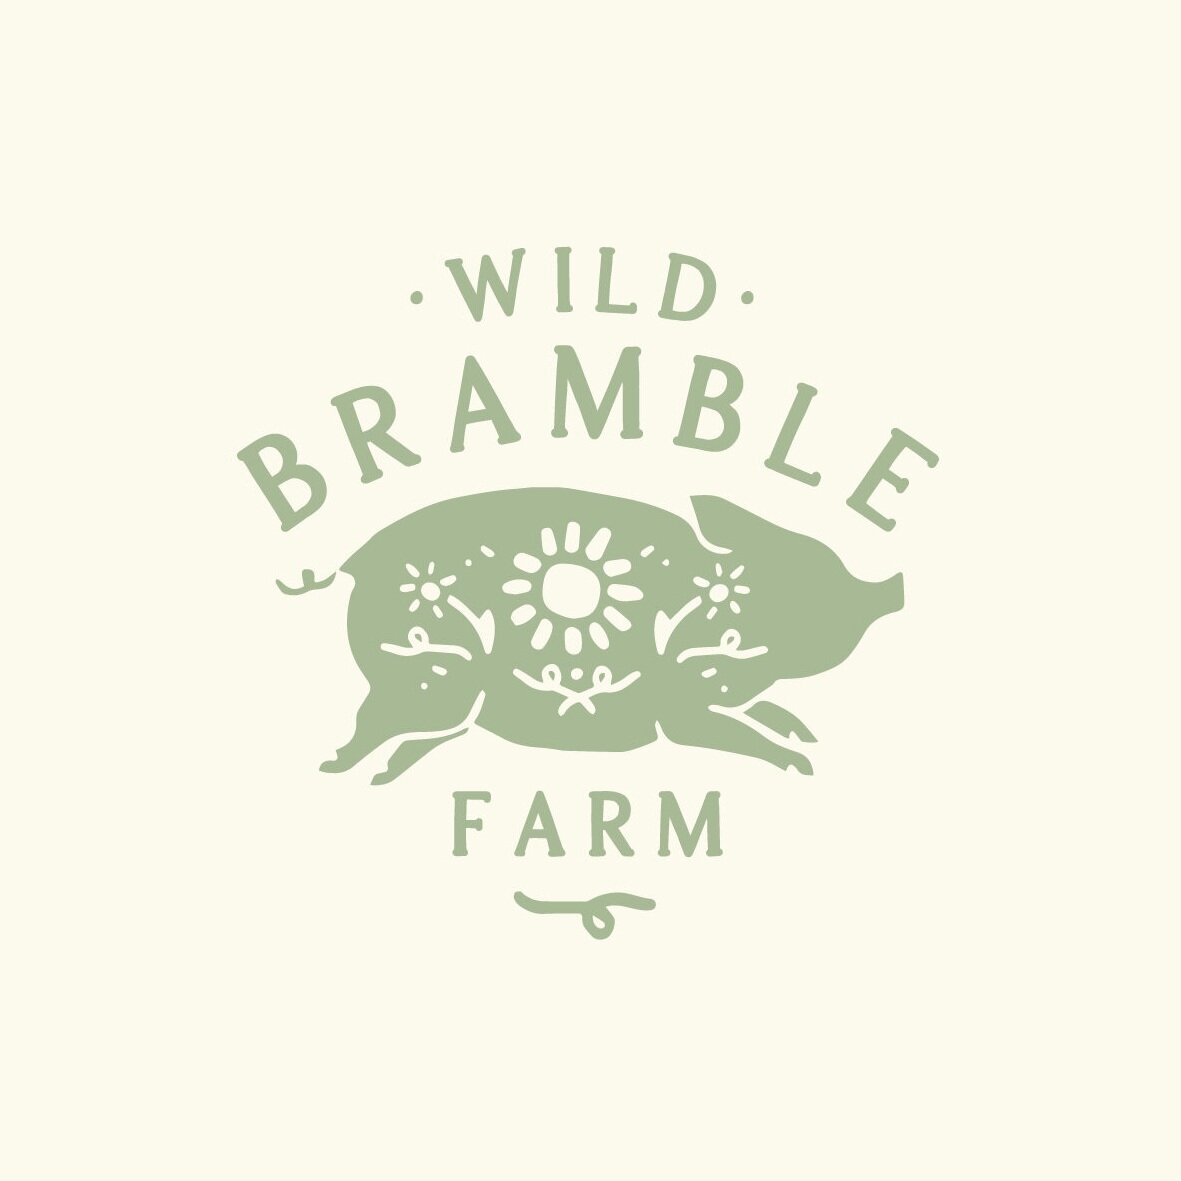 Wild+Bramble+Farm+1.jpg